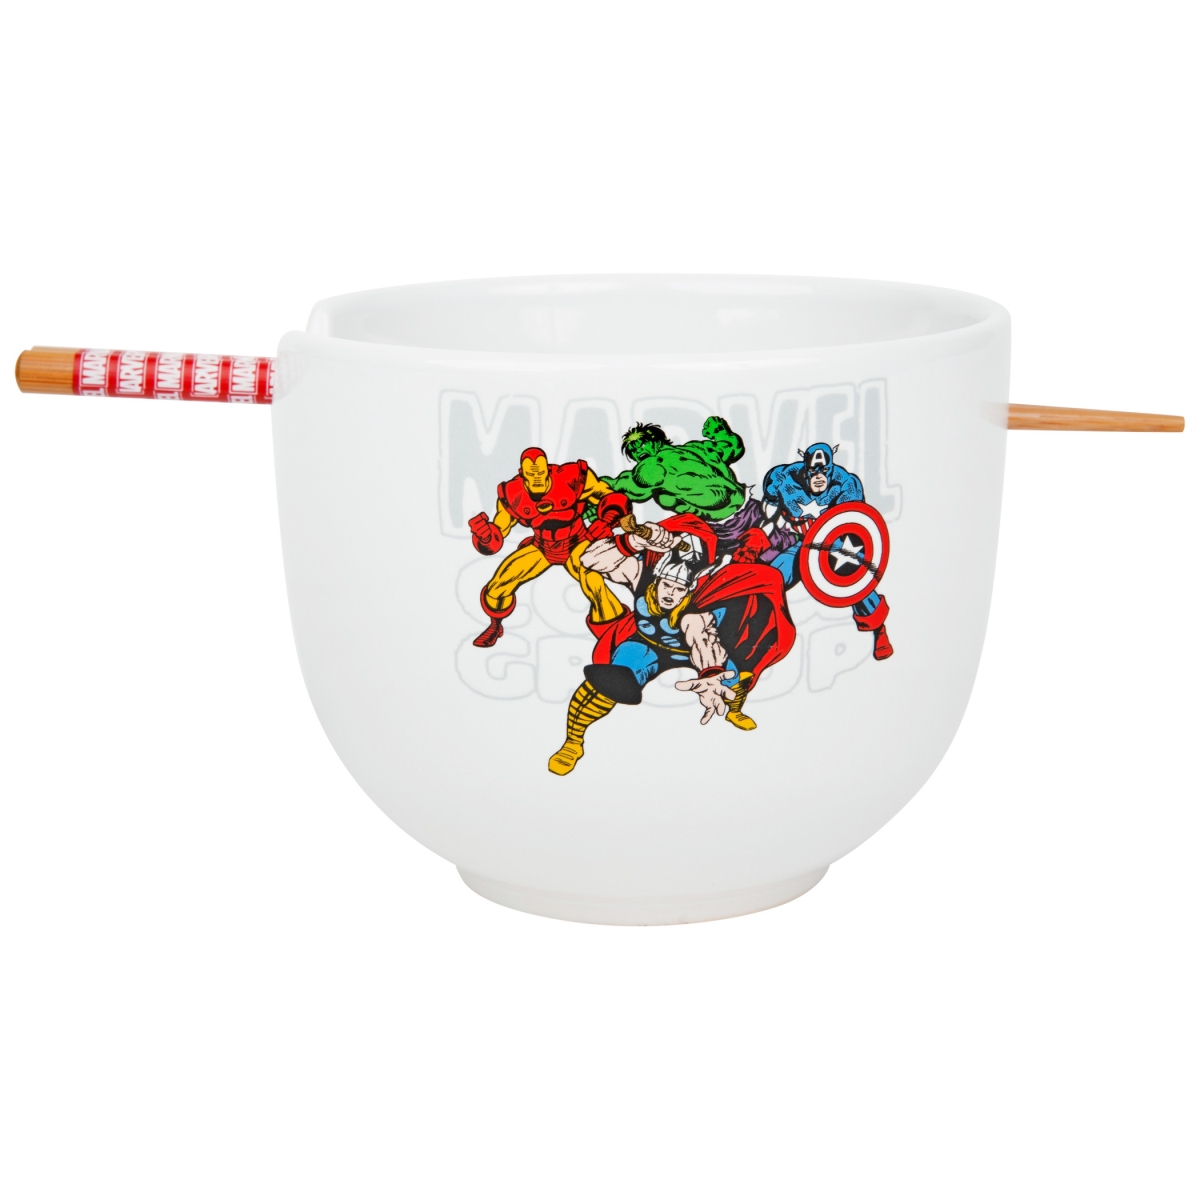 Picture of Avengers 847362 Marvel Comics Avengers Retro Group Ceramic Ramen Bowl with Chopsticks